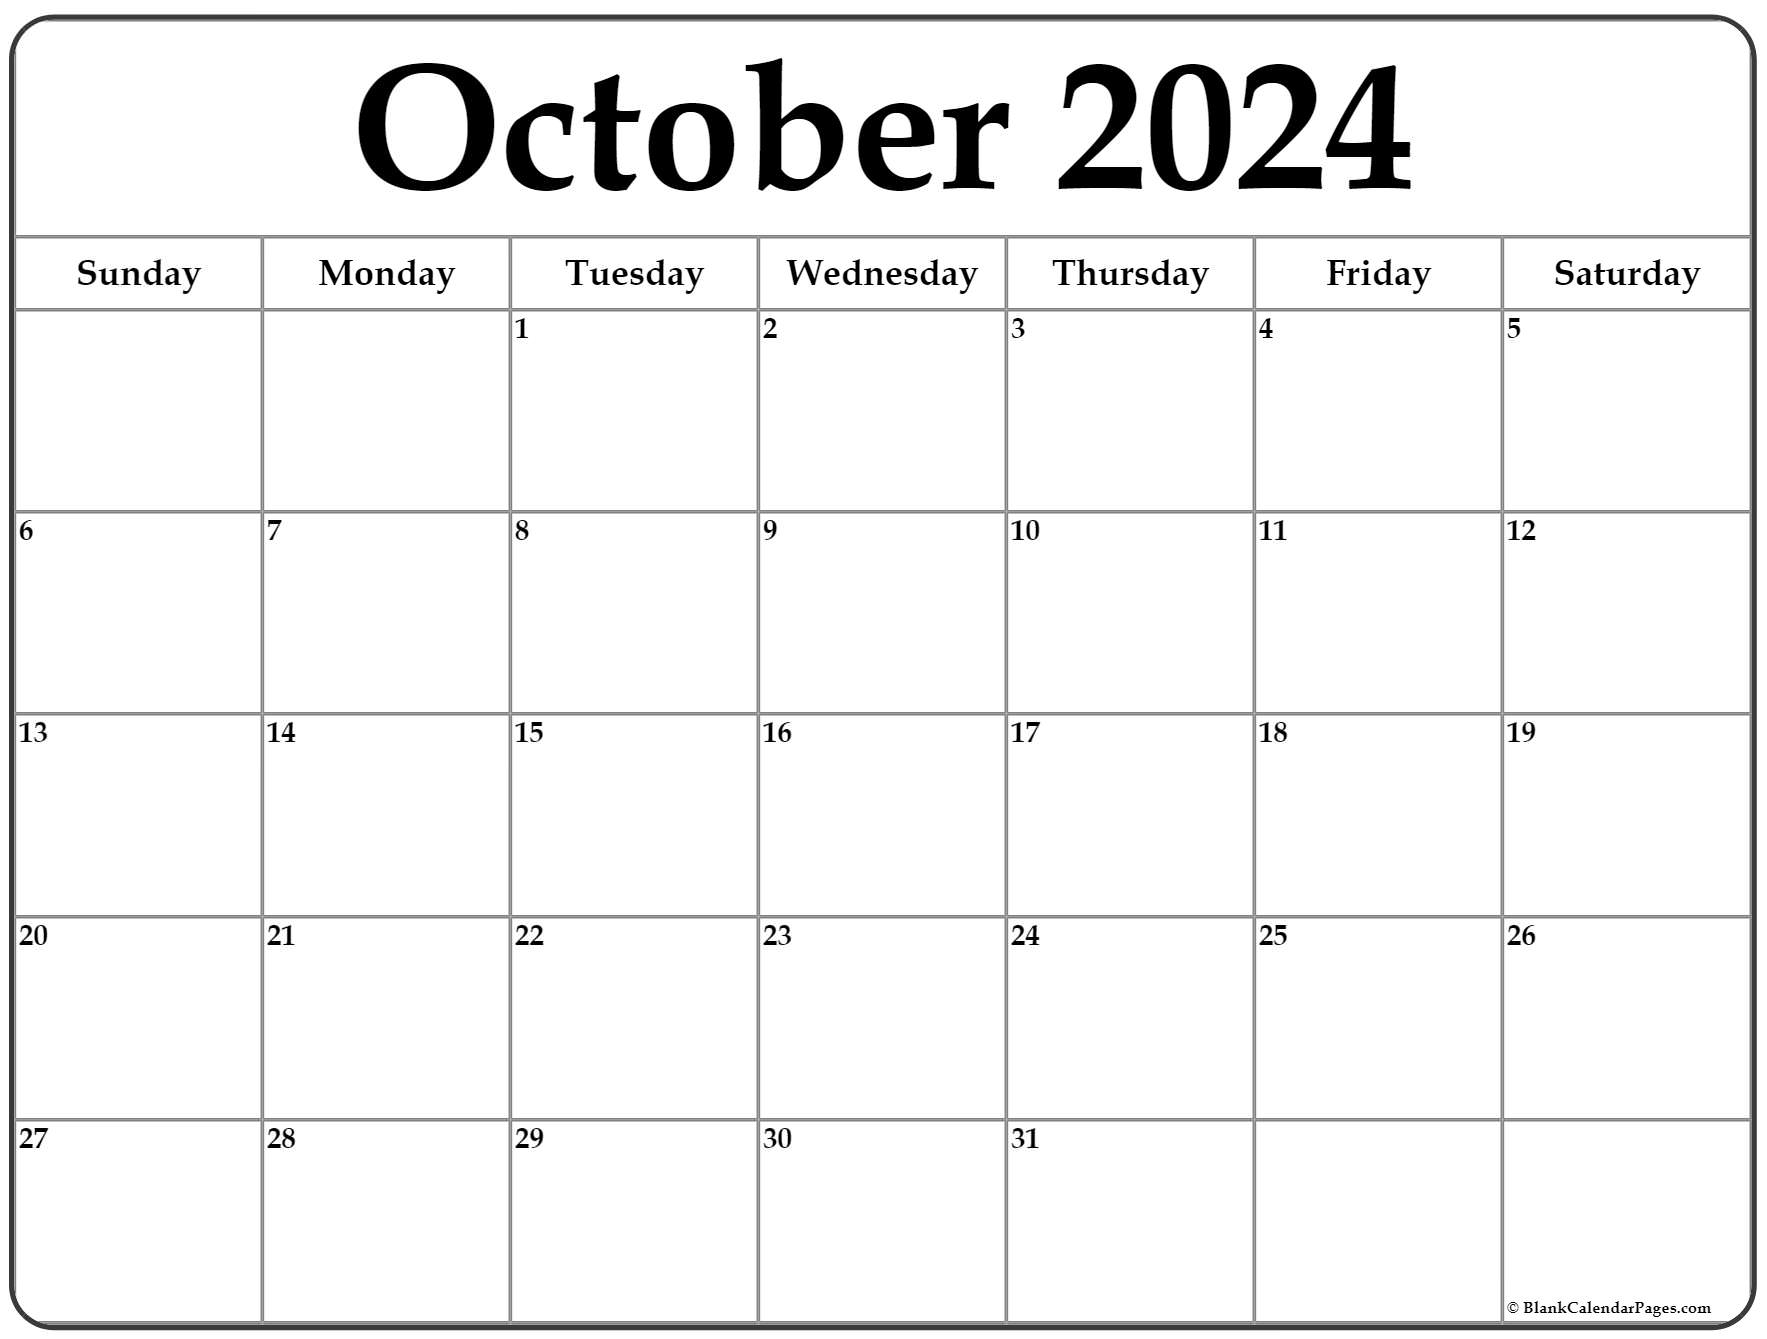 October 2022 Calendar Pdf October 2022 Calendar | Free Printable Calendar Templates